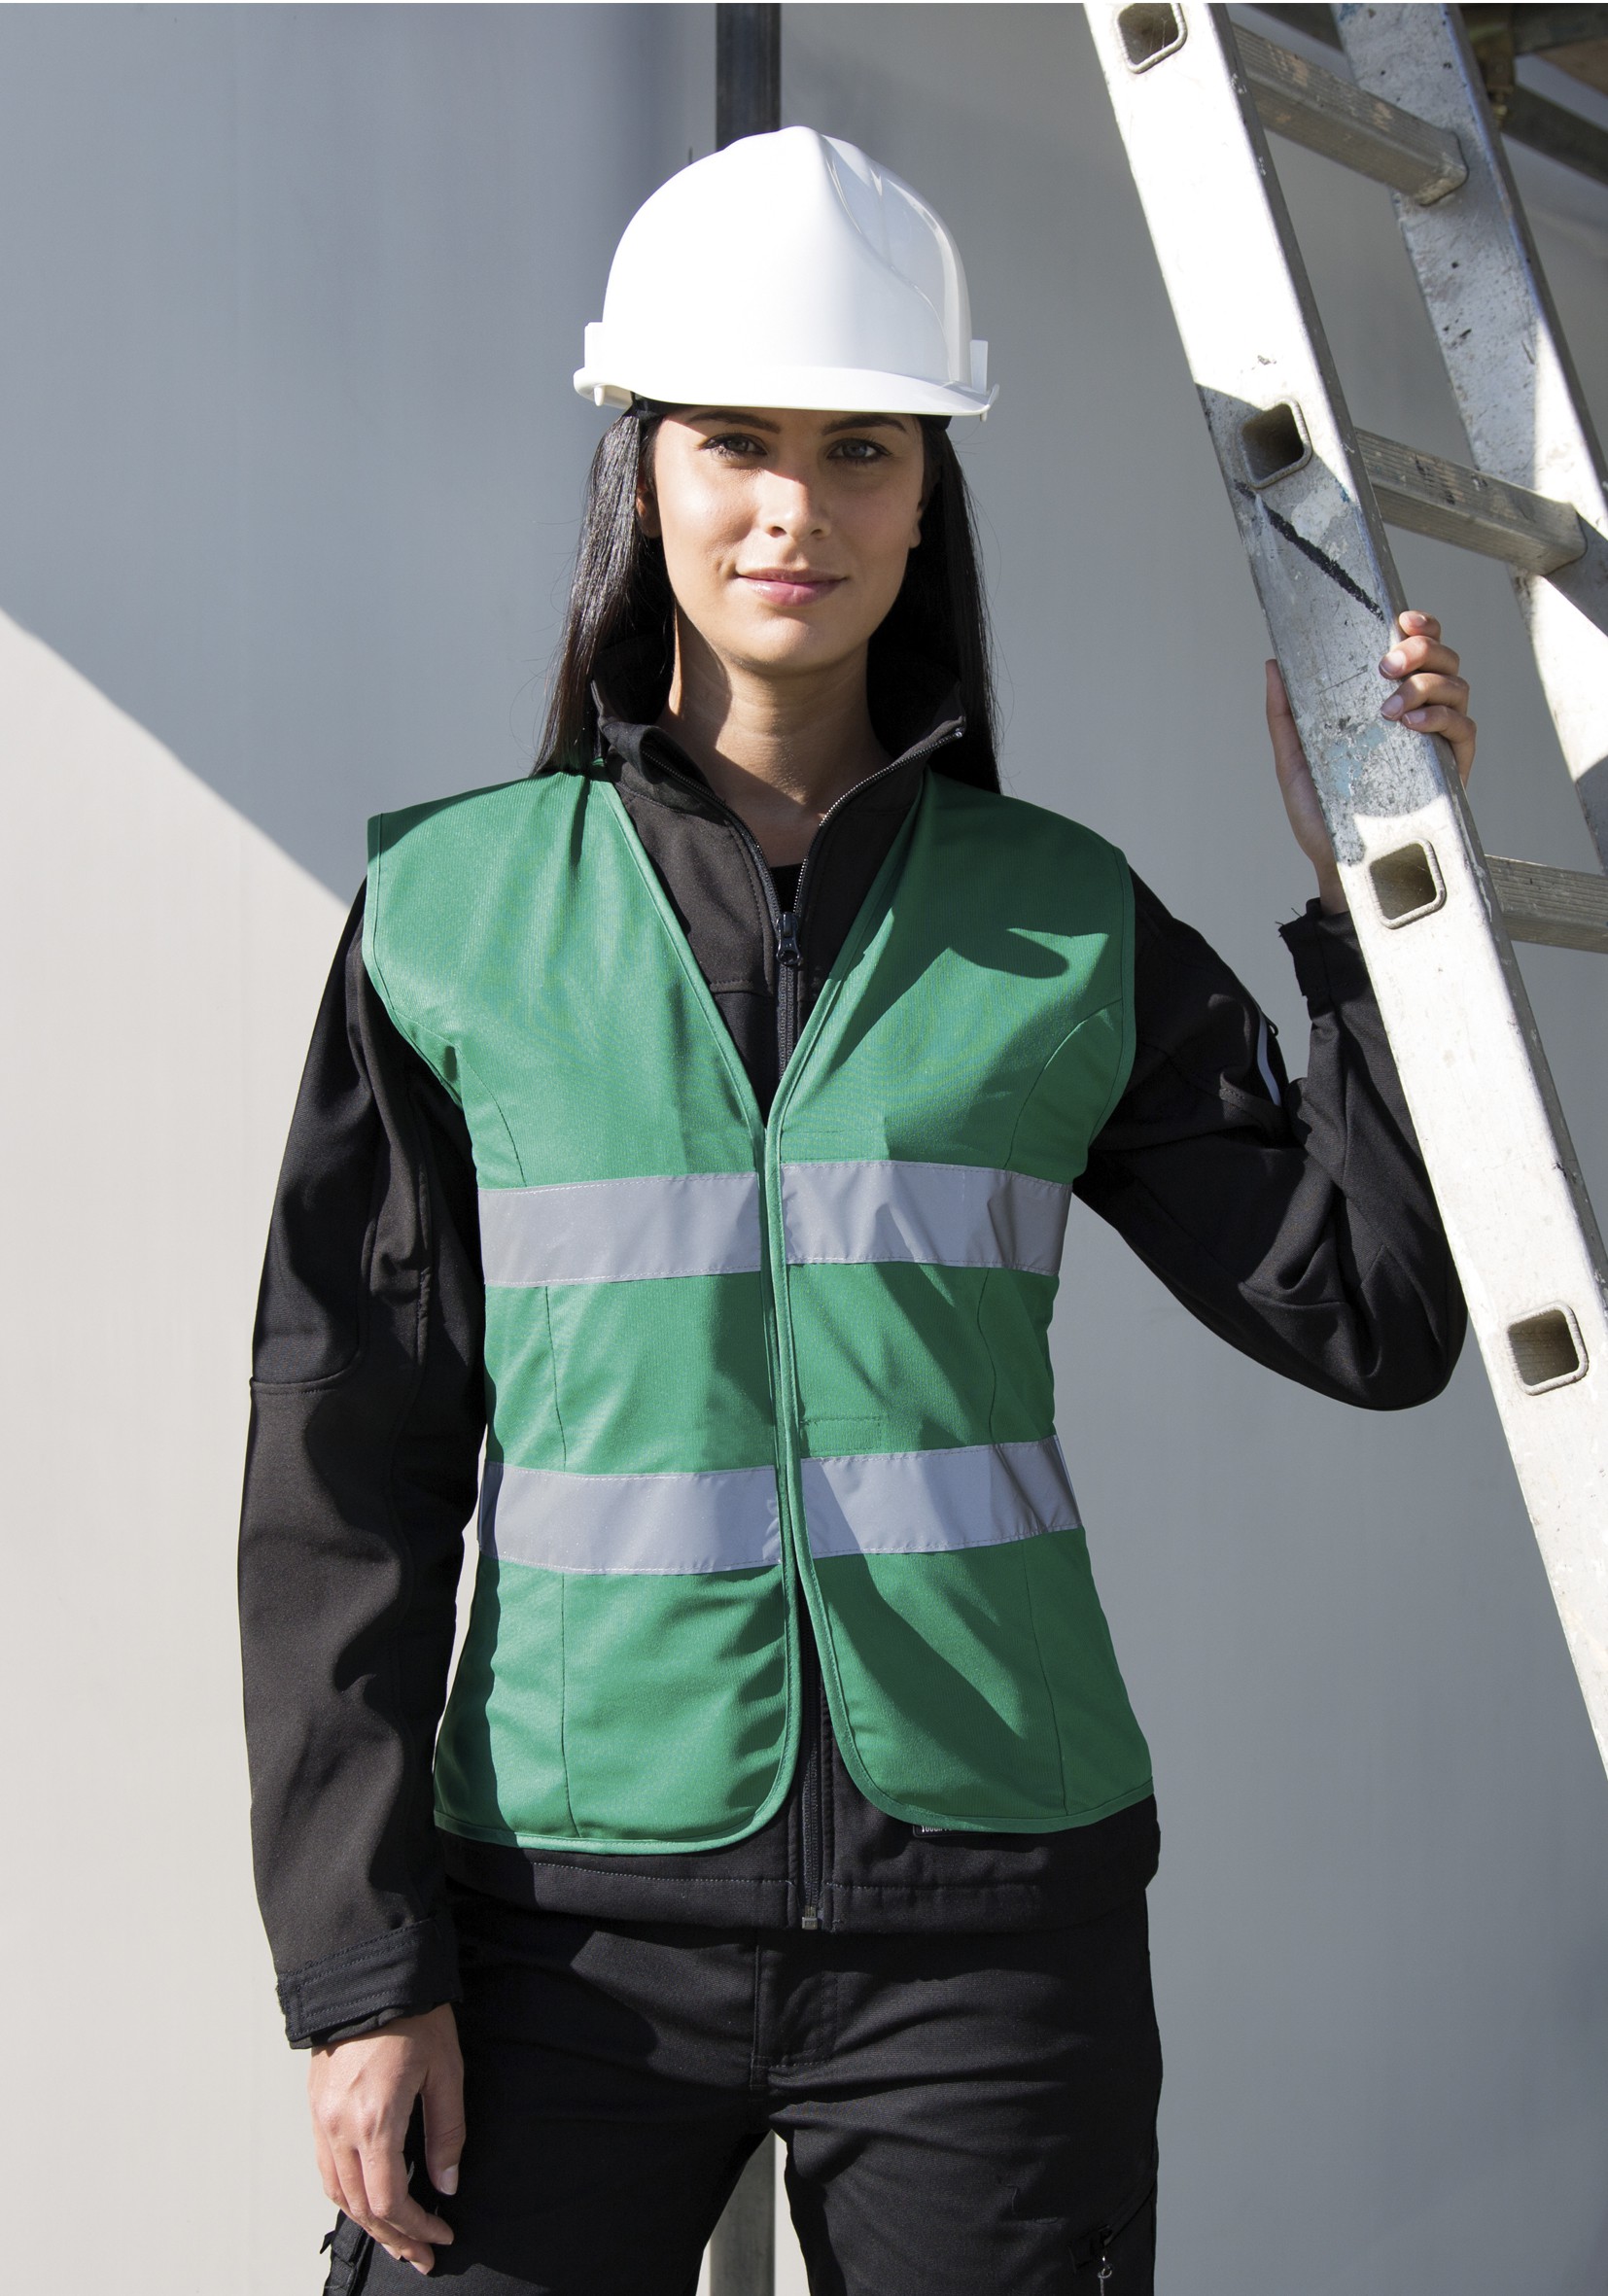 A-SAFETY - Chalecos de seguridad rosa para mujer, chaleco de seguridad de  trabajo con bandas reflectantes, talla M